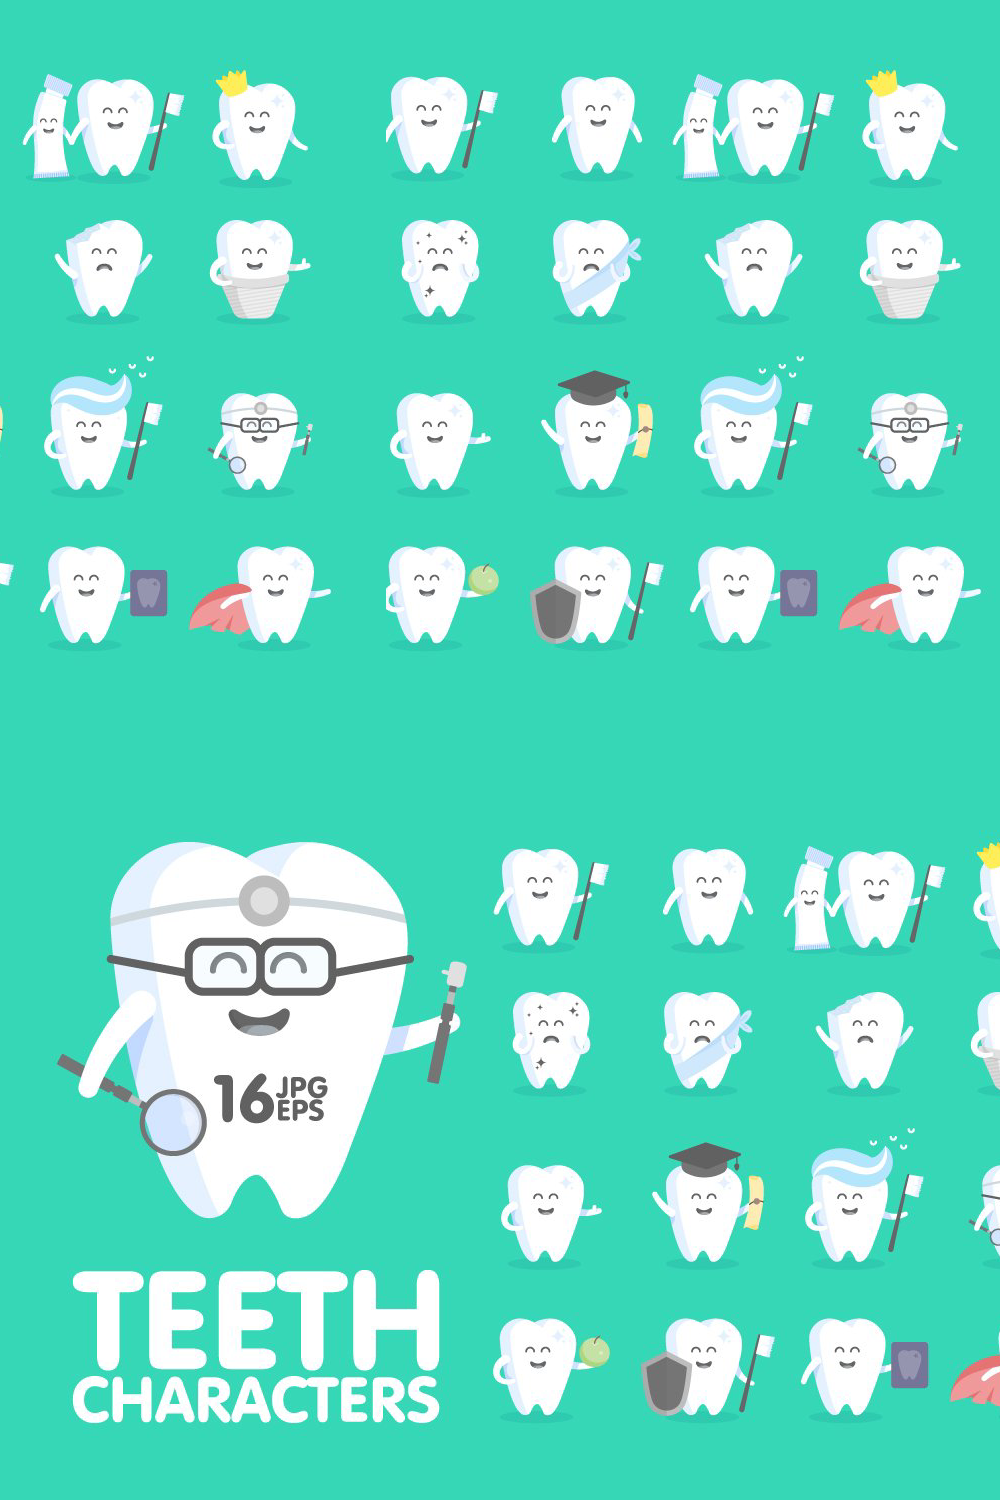 teeth characters pinterest. 376